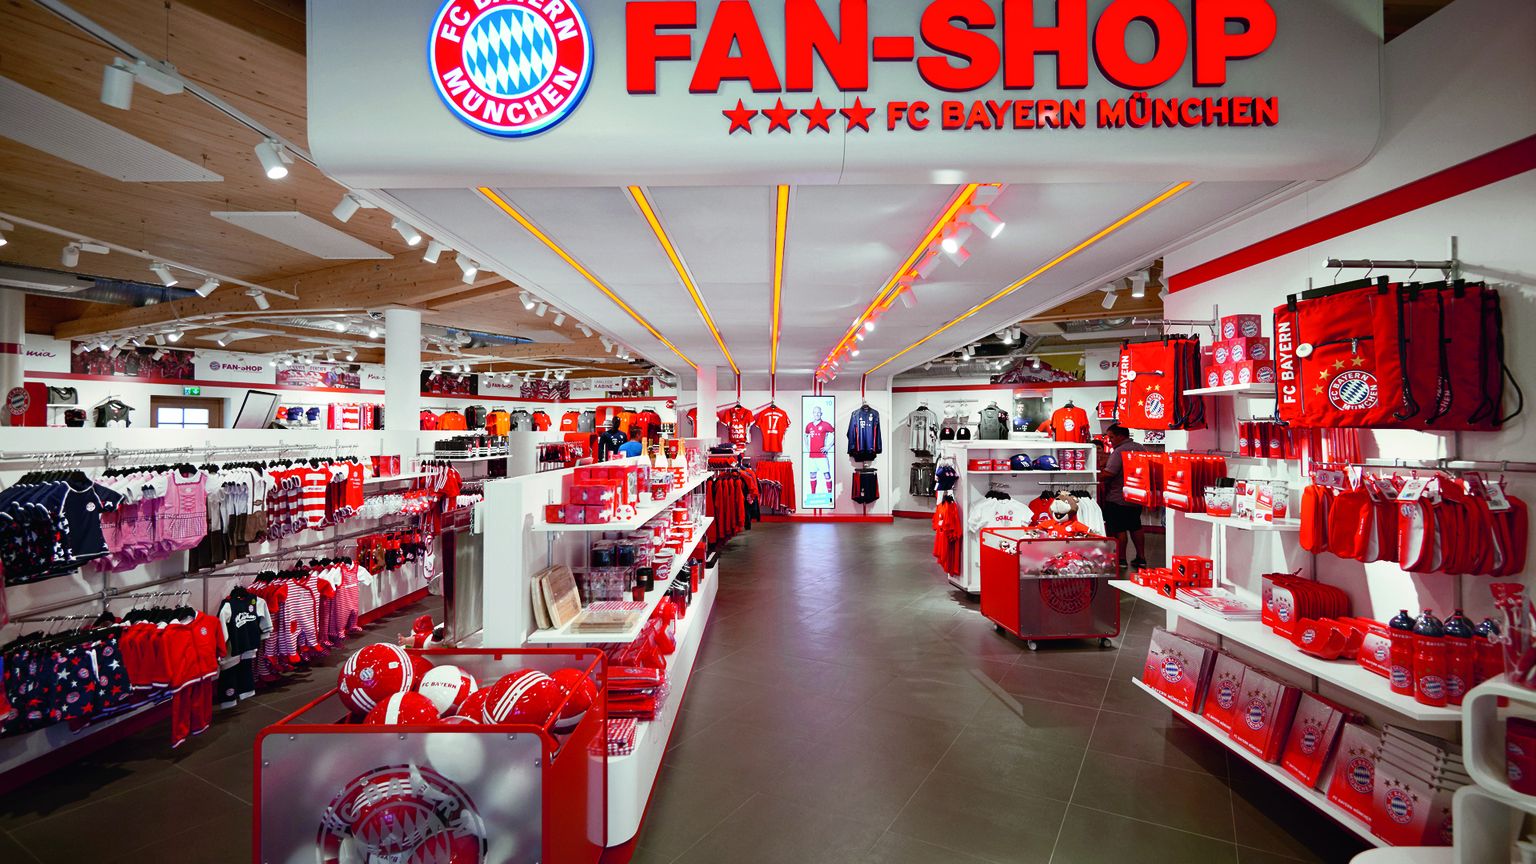 Fan Merchandise For The Soccer FC Bayern München Munich In A Shop Window Editorial Image Image Of League, Nchen: 191432035 | icbritanico.edu.ar